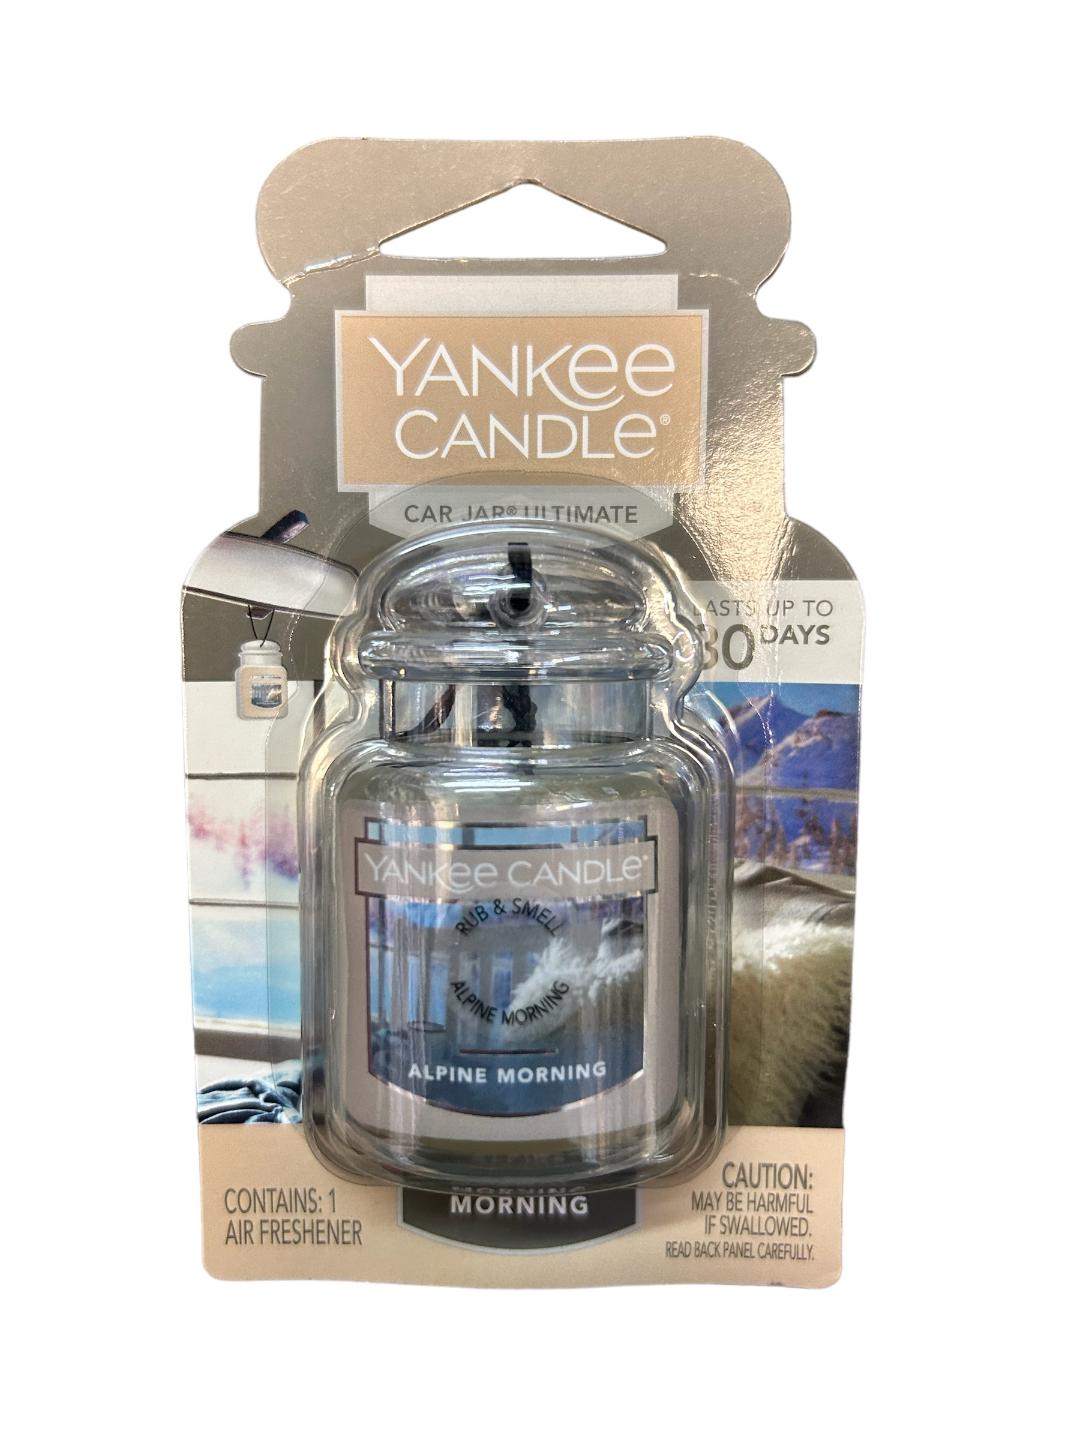 Yankee Car Jar Ultimates